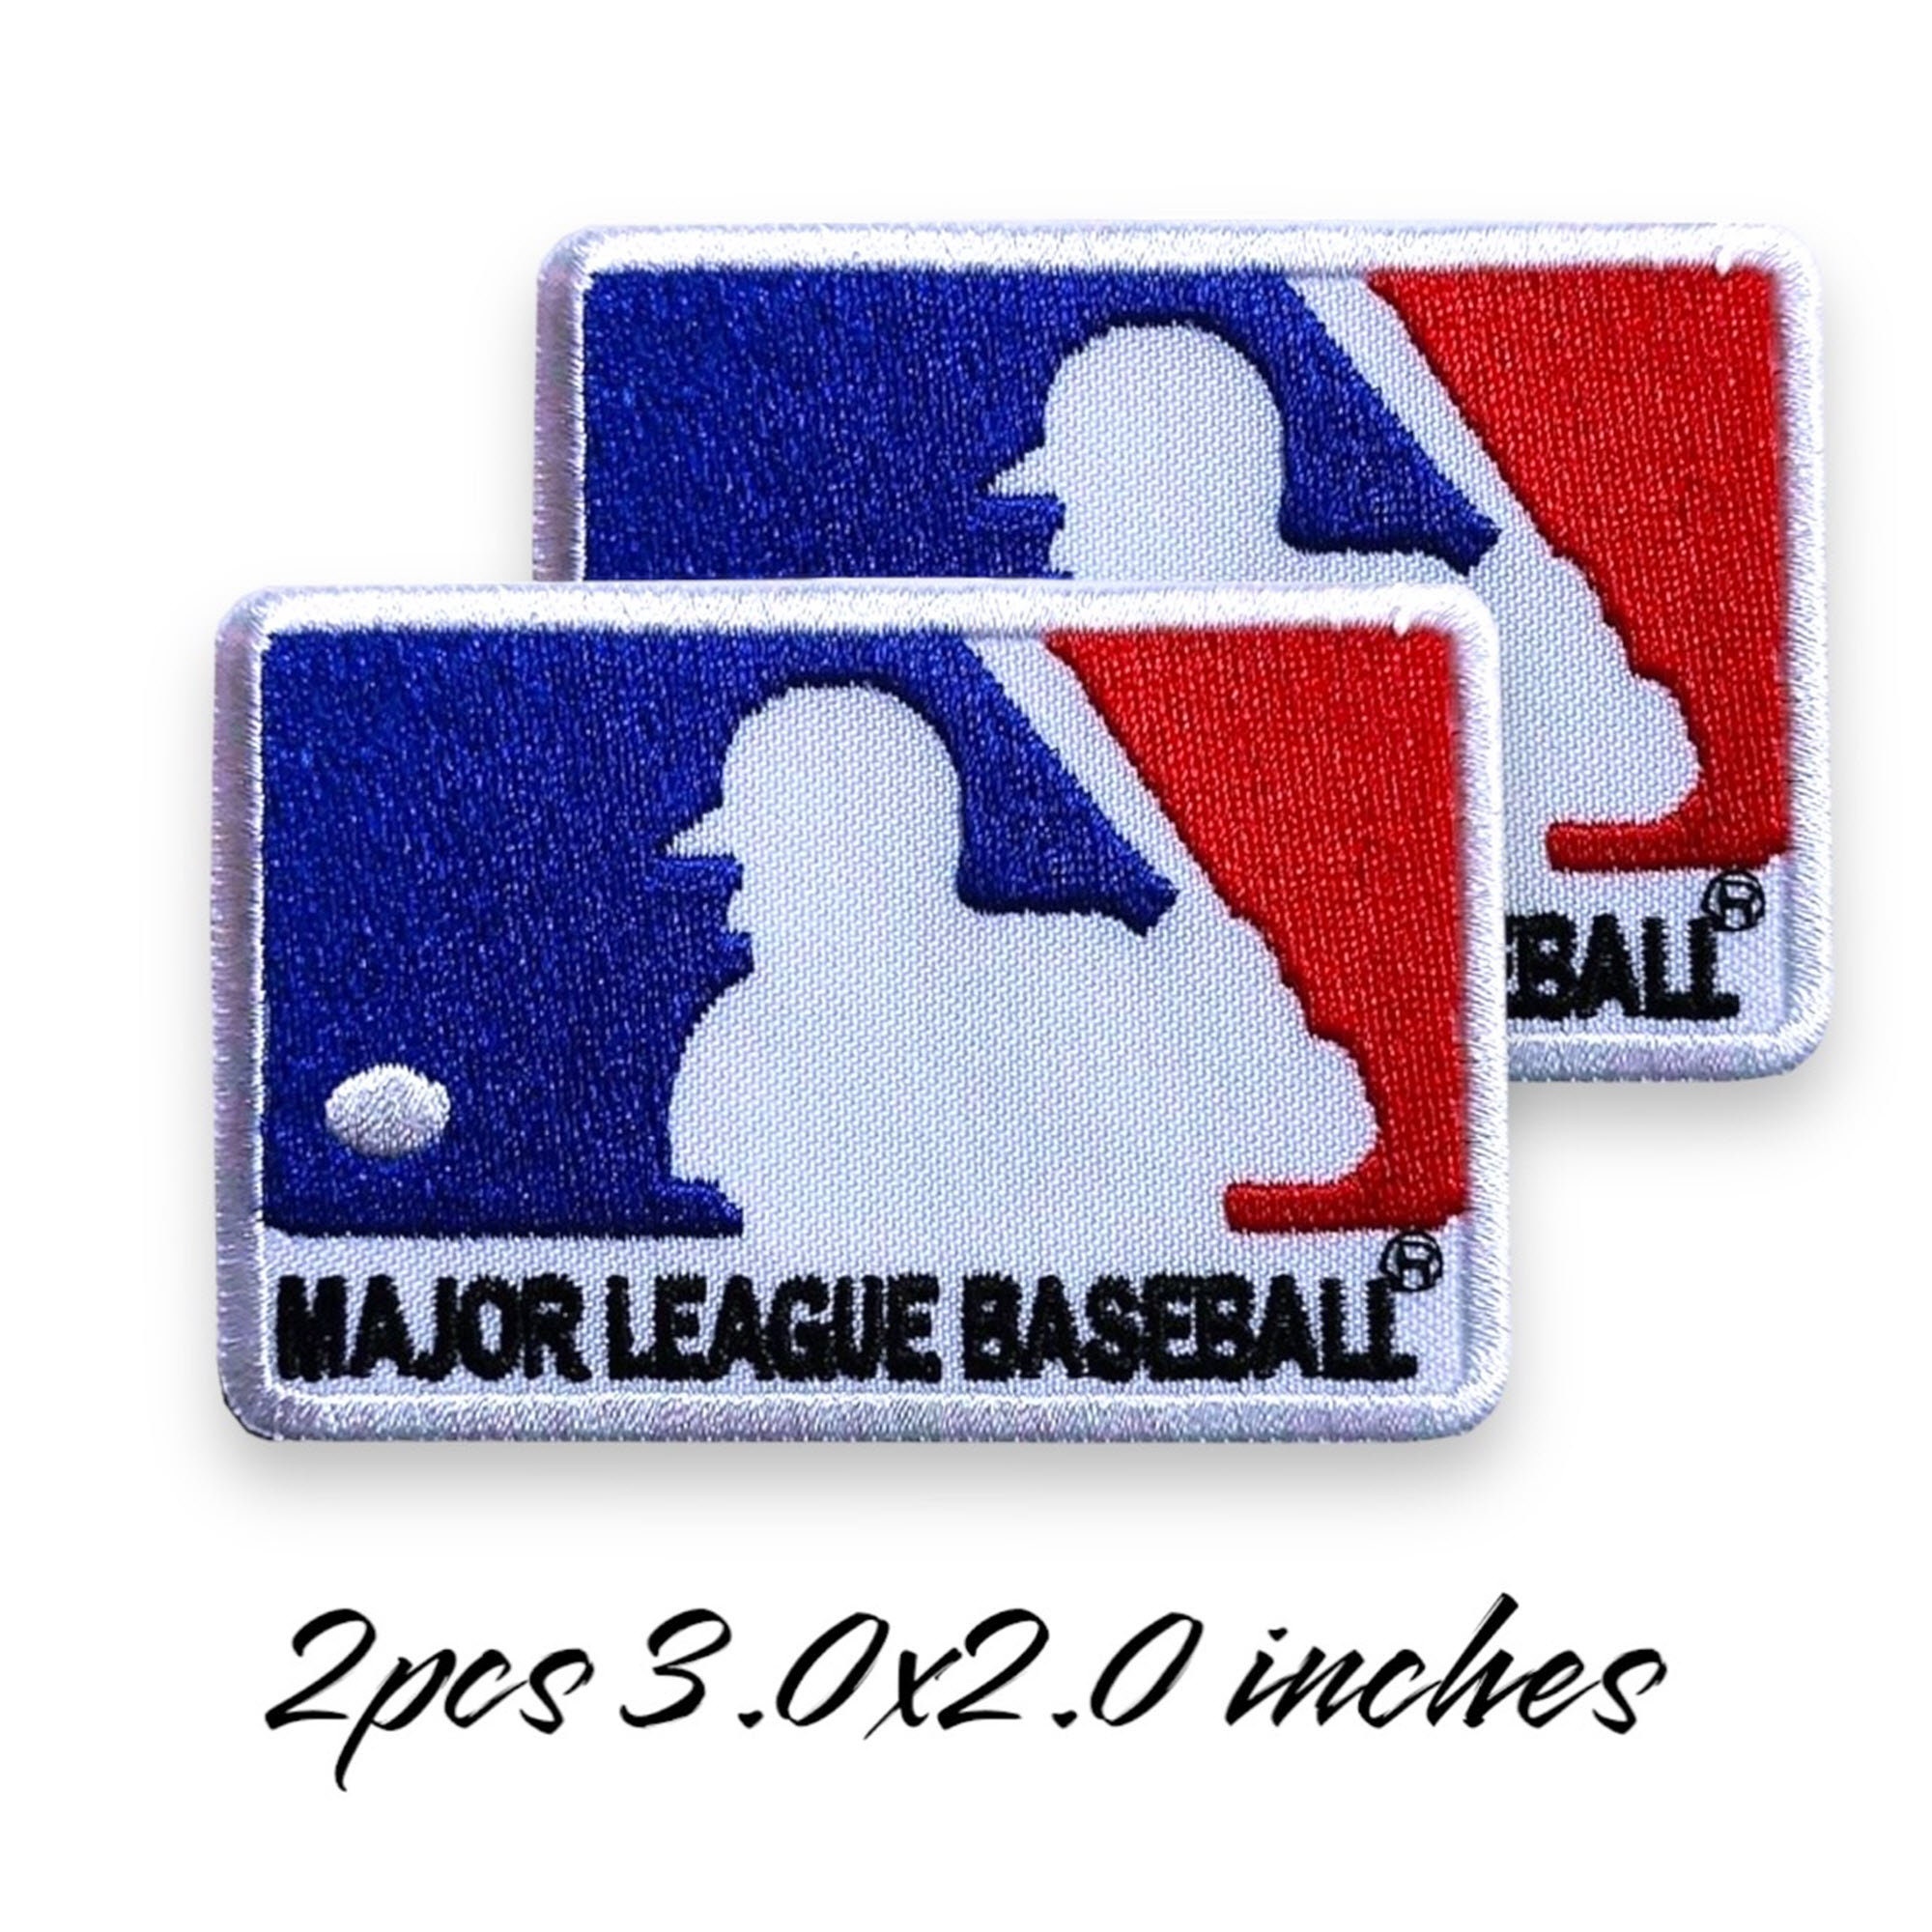 ST. LOUIS CARDINALS MLB BASEBALL VINTAGE HUGE XL 15 TEAM LOGO PATCH RARE